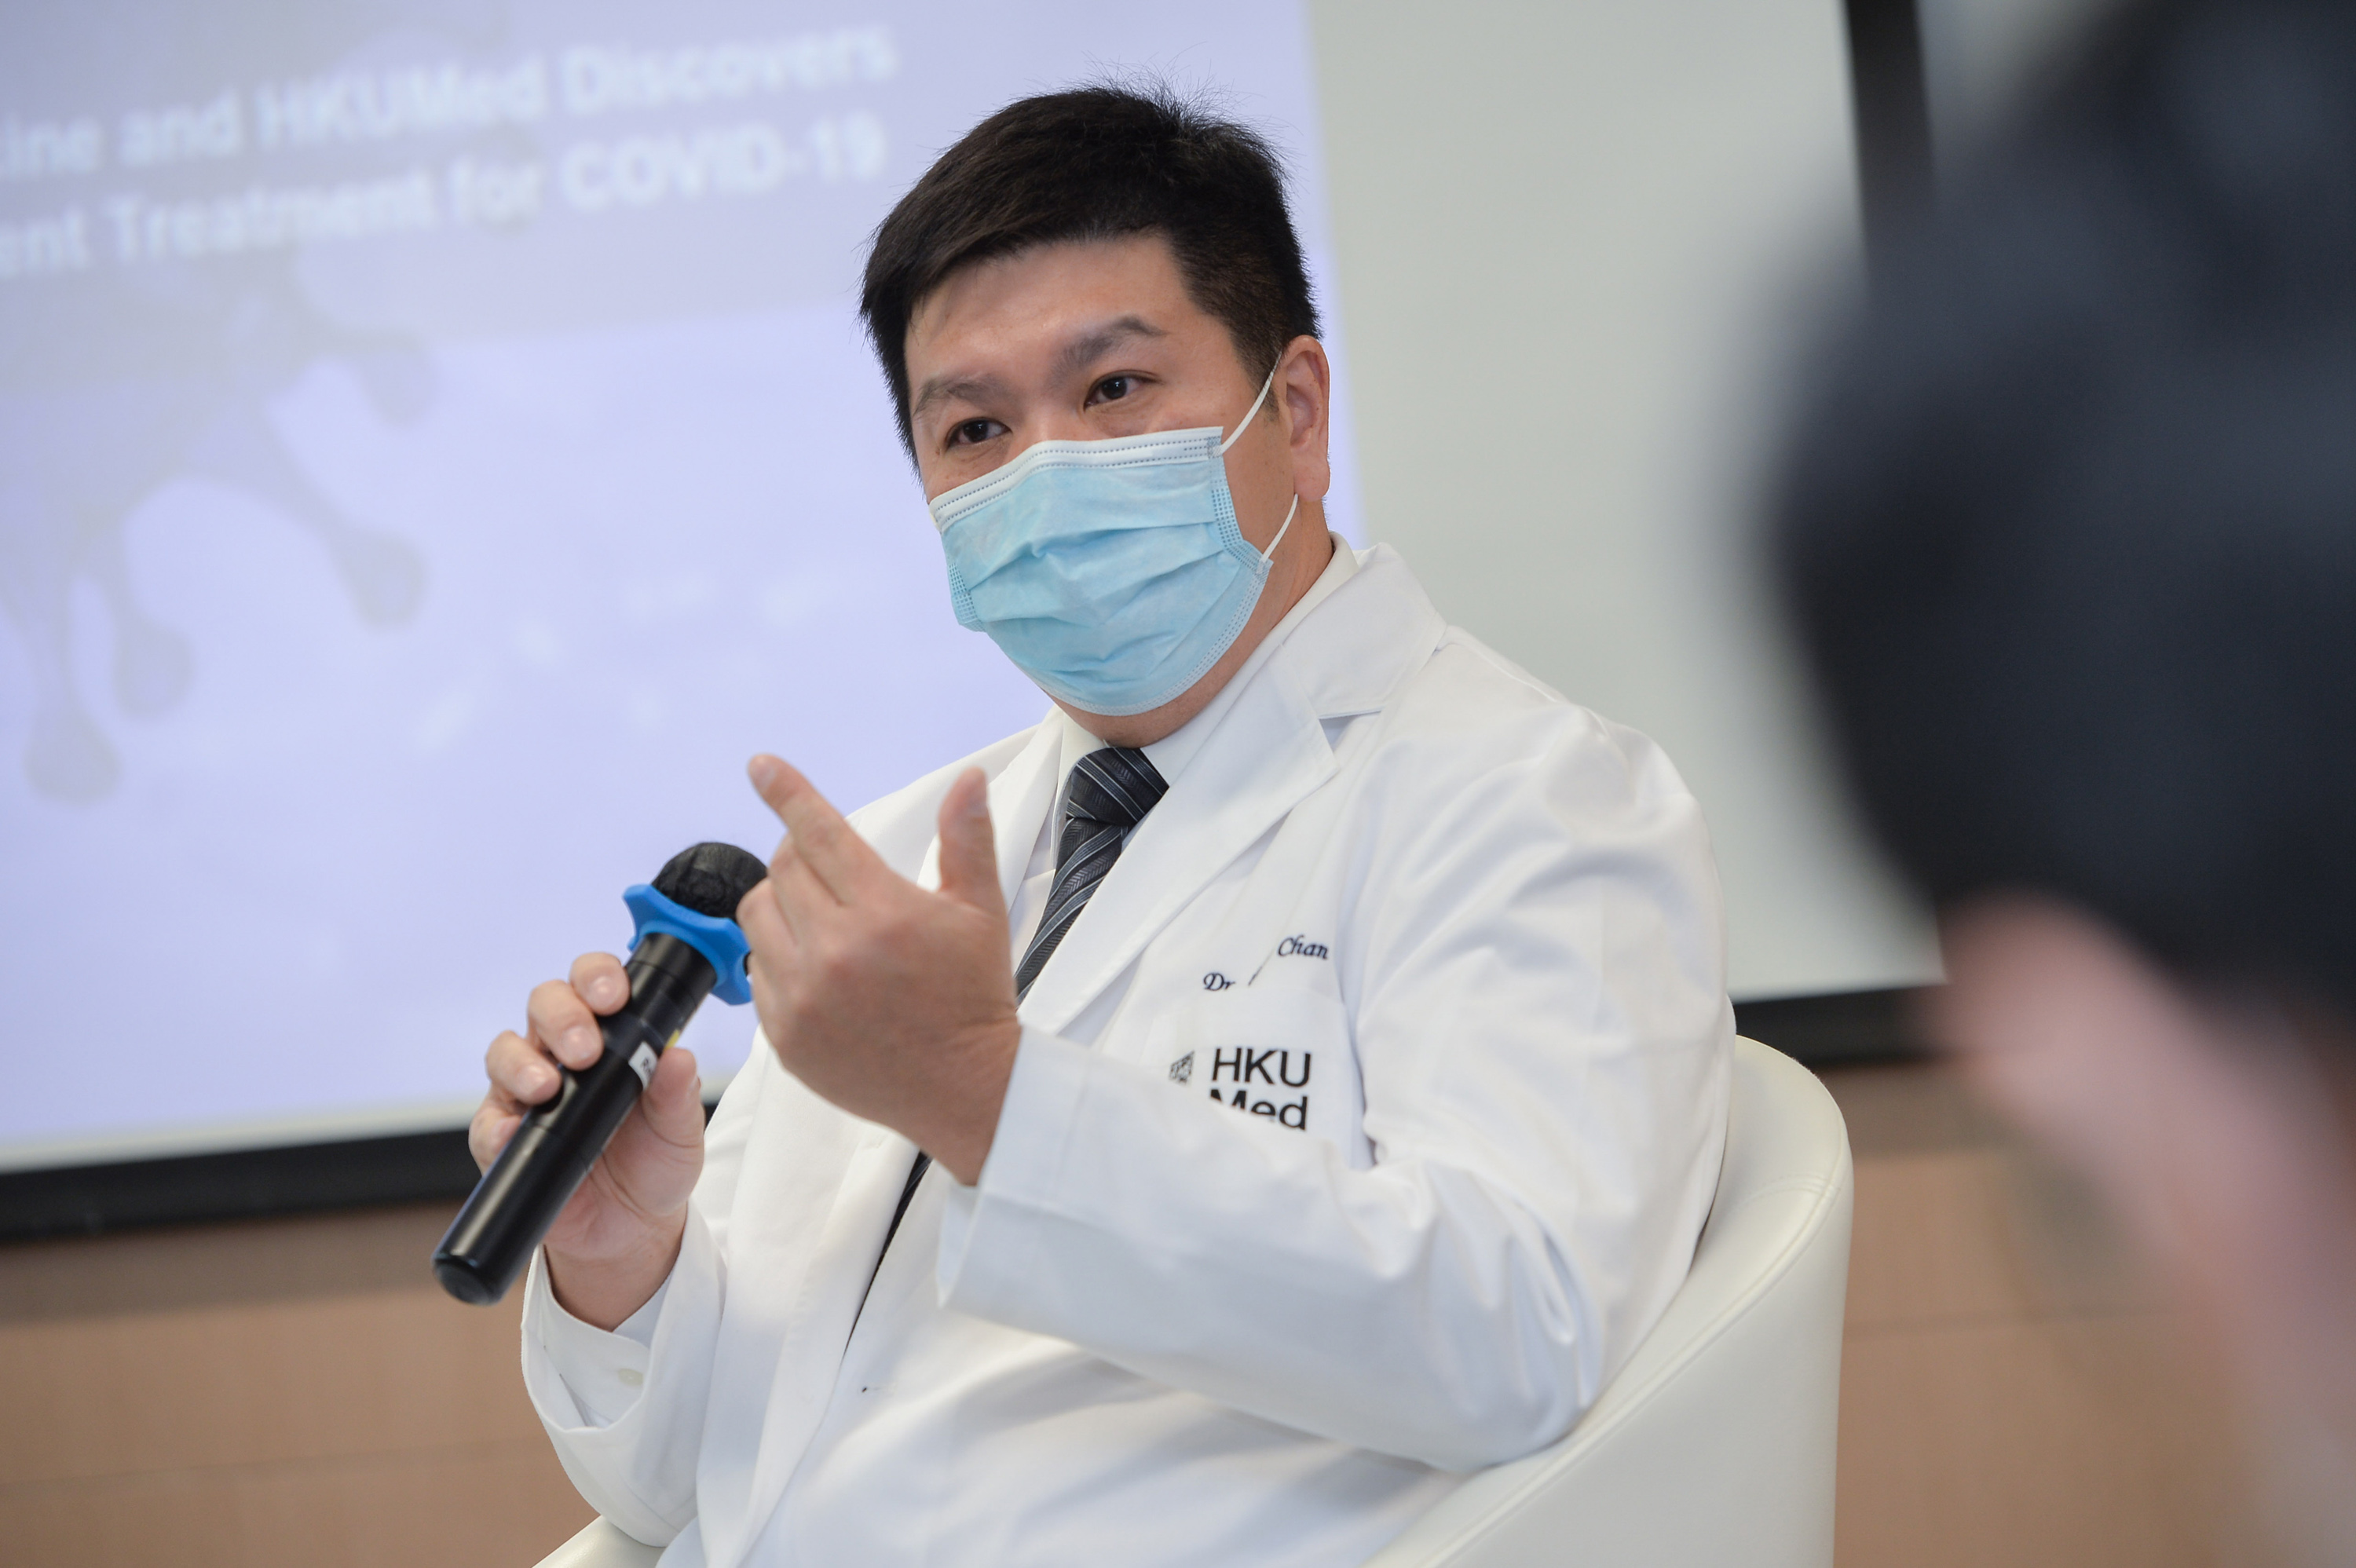 Dr. Samuel Chan